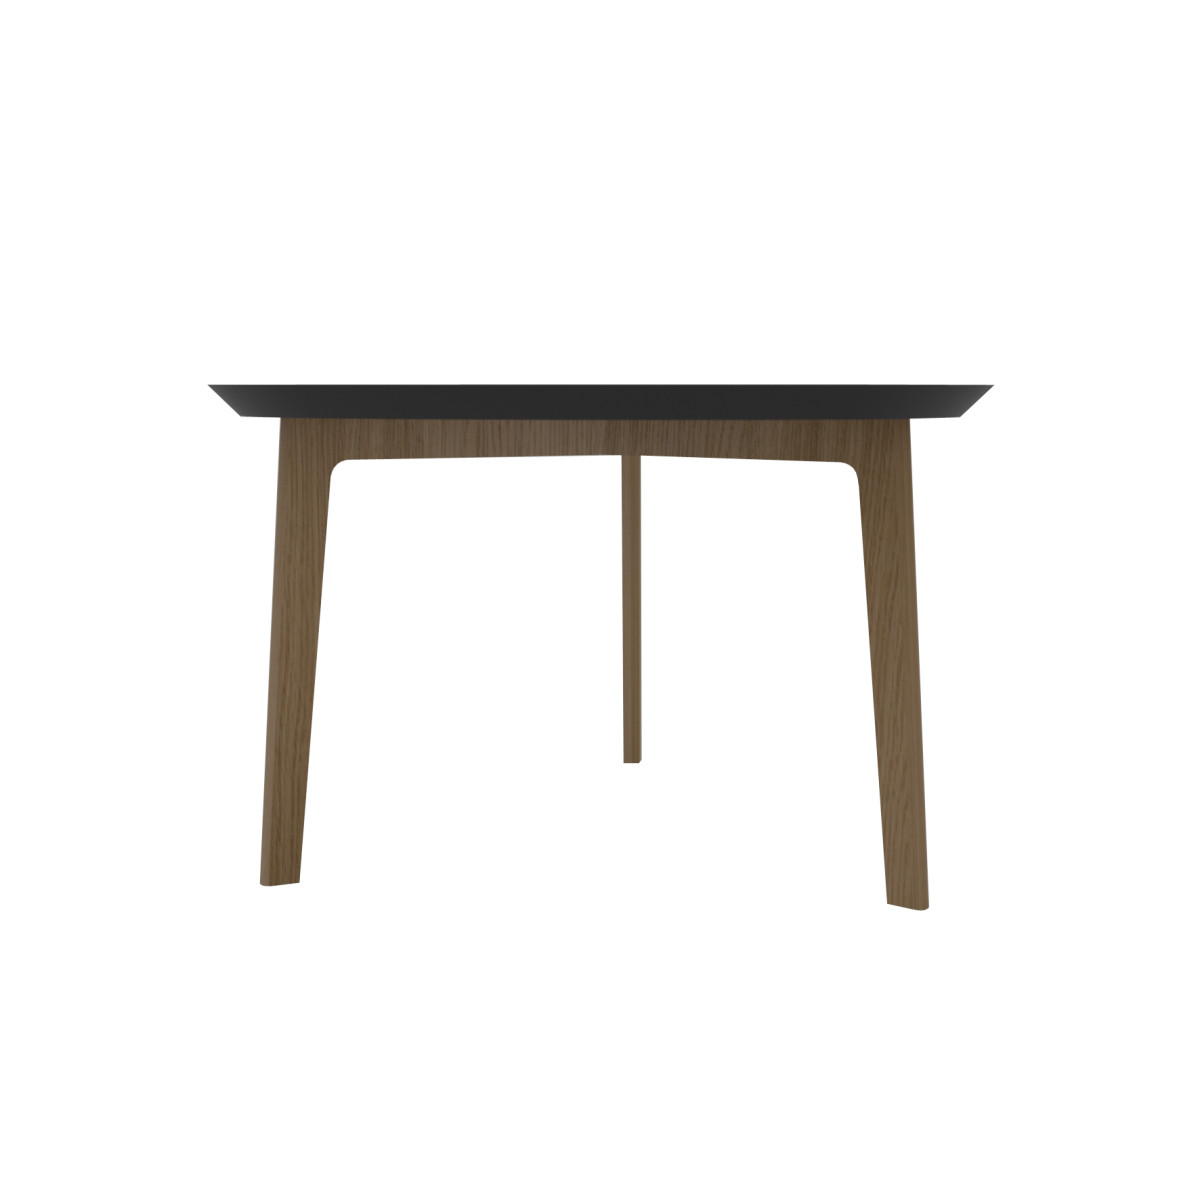 SiSi Coffee table B – table top massive oak